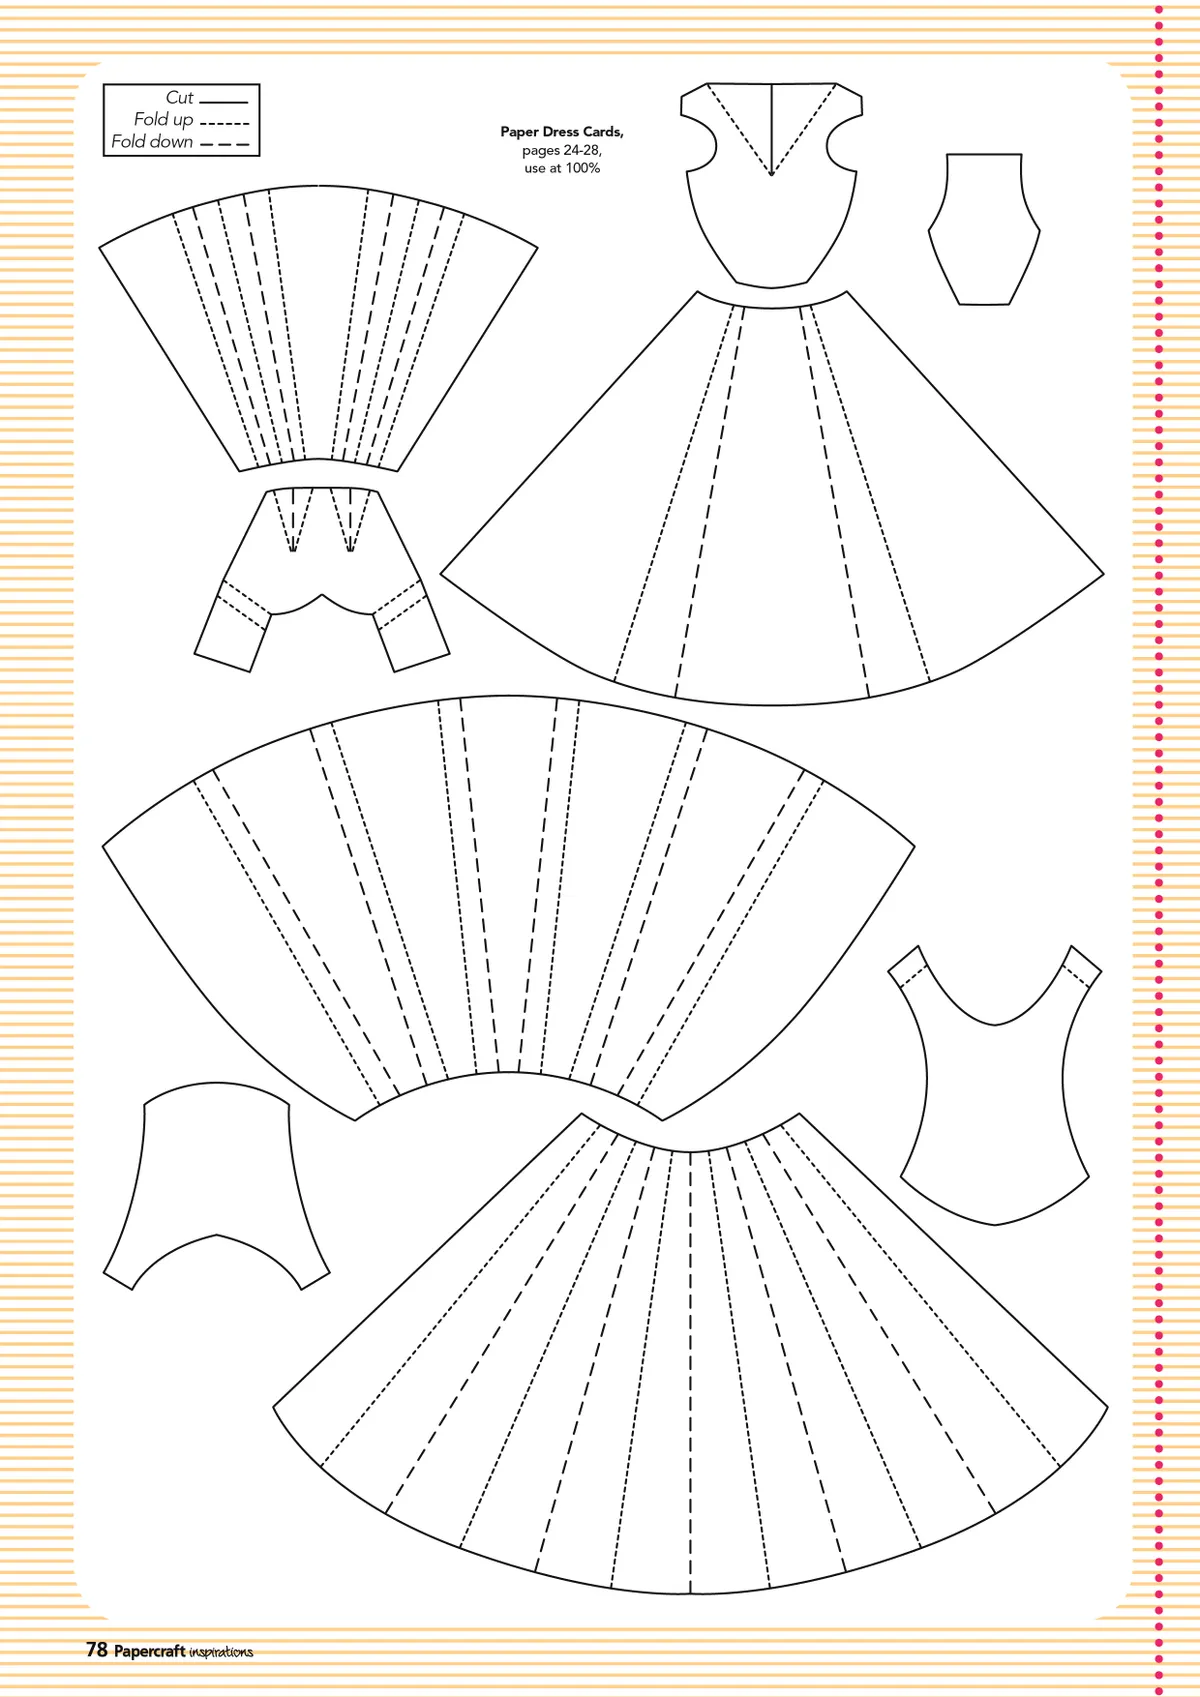 Folded paper dress cardmaking template 02